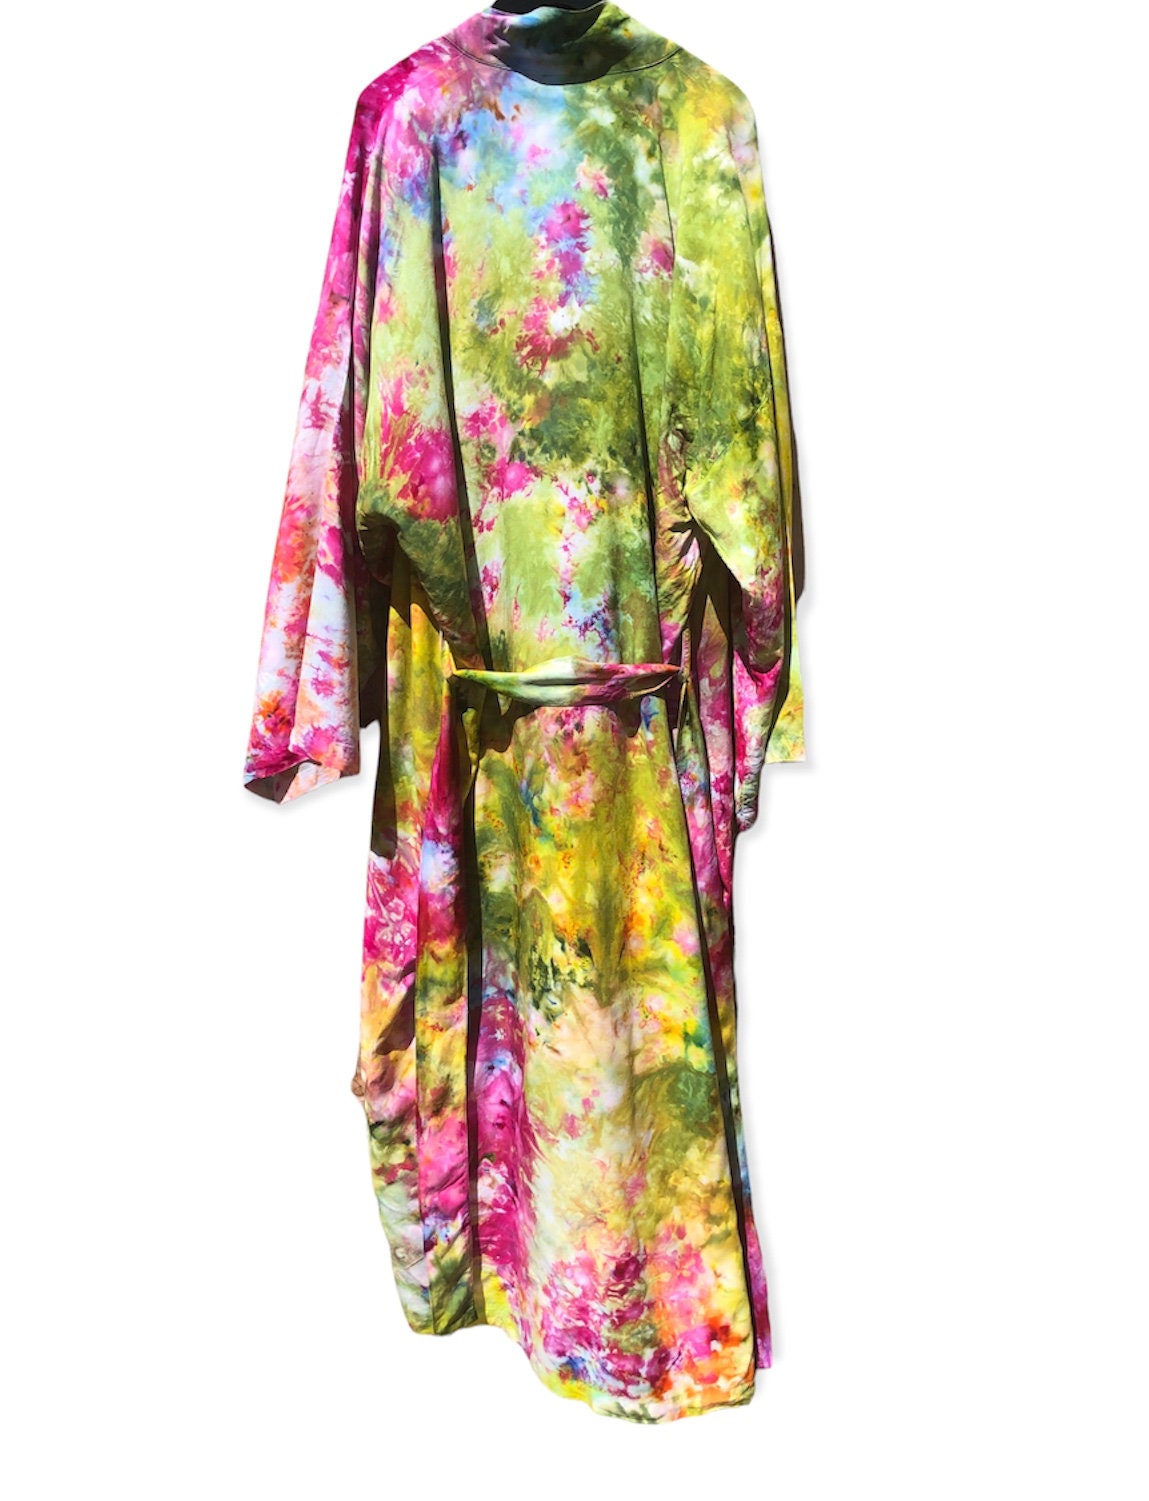 MOOD RING Ice Dyed Long Kimono Robe Tocayo Tie Dye Rayon | Etsy